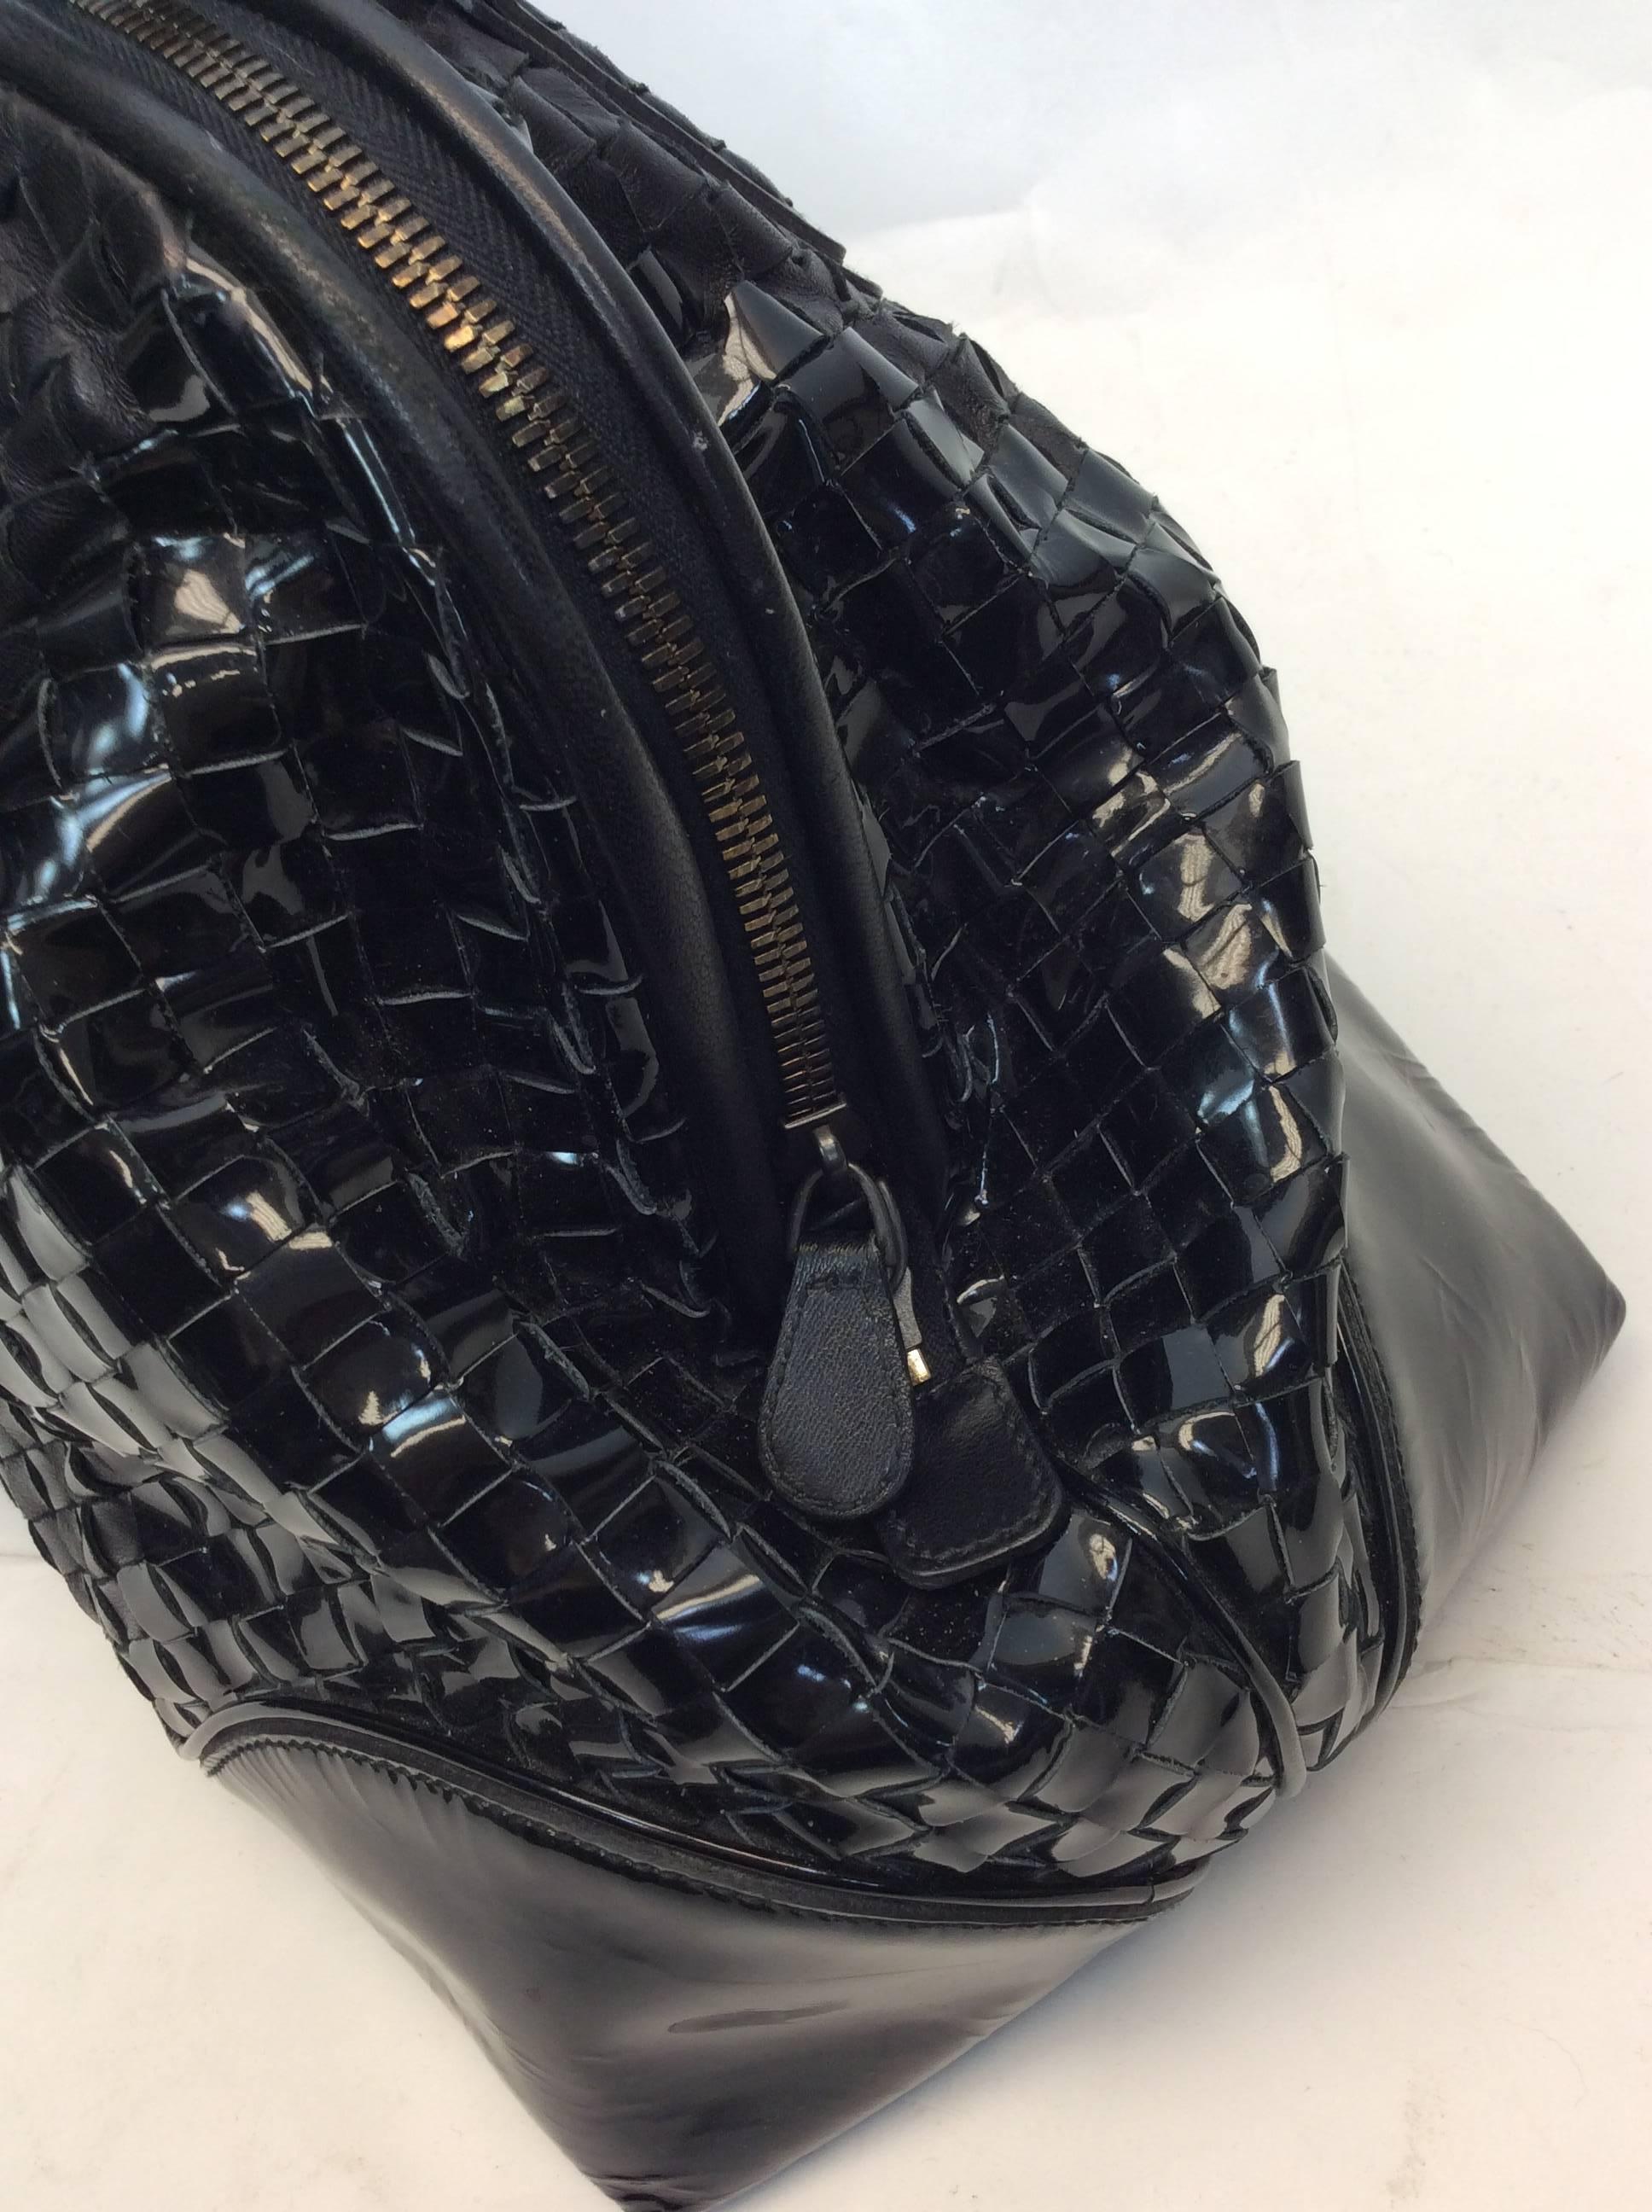 Bottega Veneta Black Woven Striped Handbag In Excellent Condition For Sale In Narberth, PA